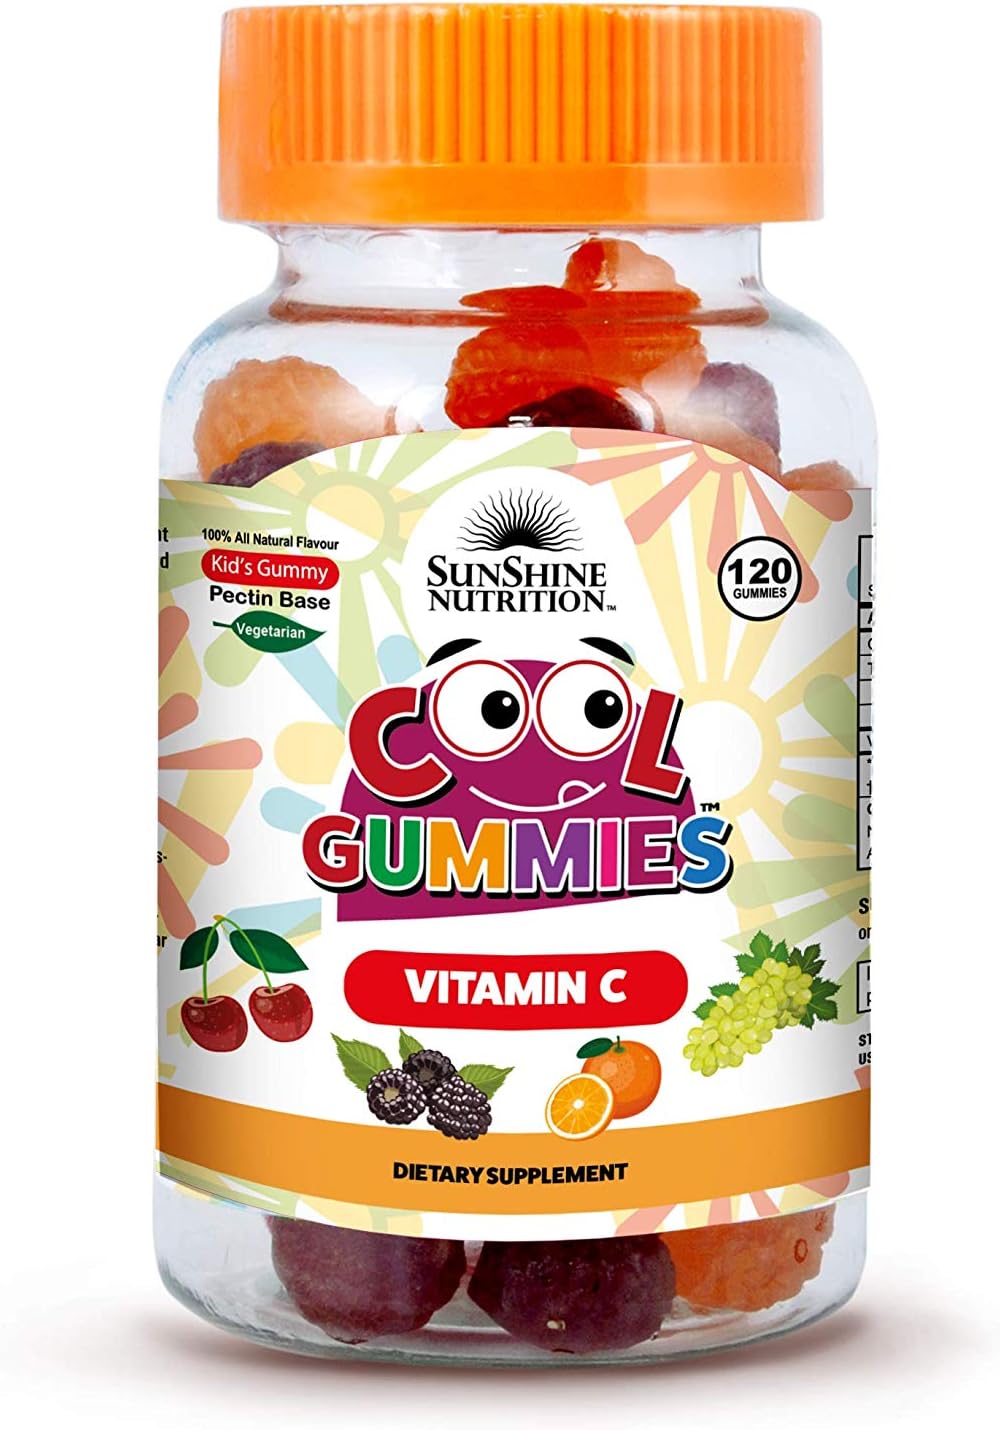 SUNSHINE NUTRITION COOL GUMMIES KIDS VITAMIN C 120'S GUMMIES 